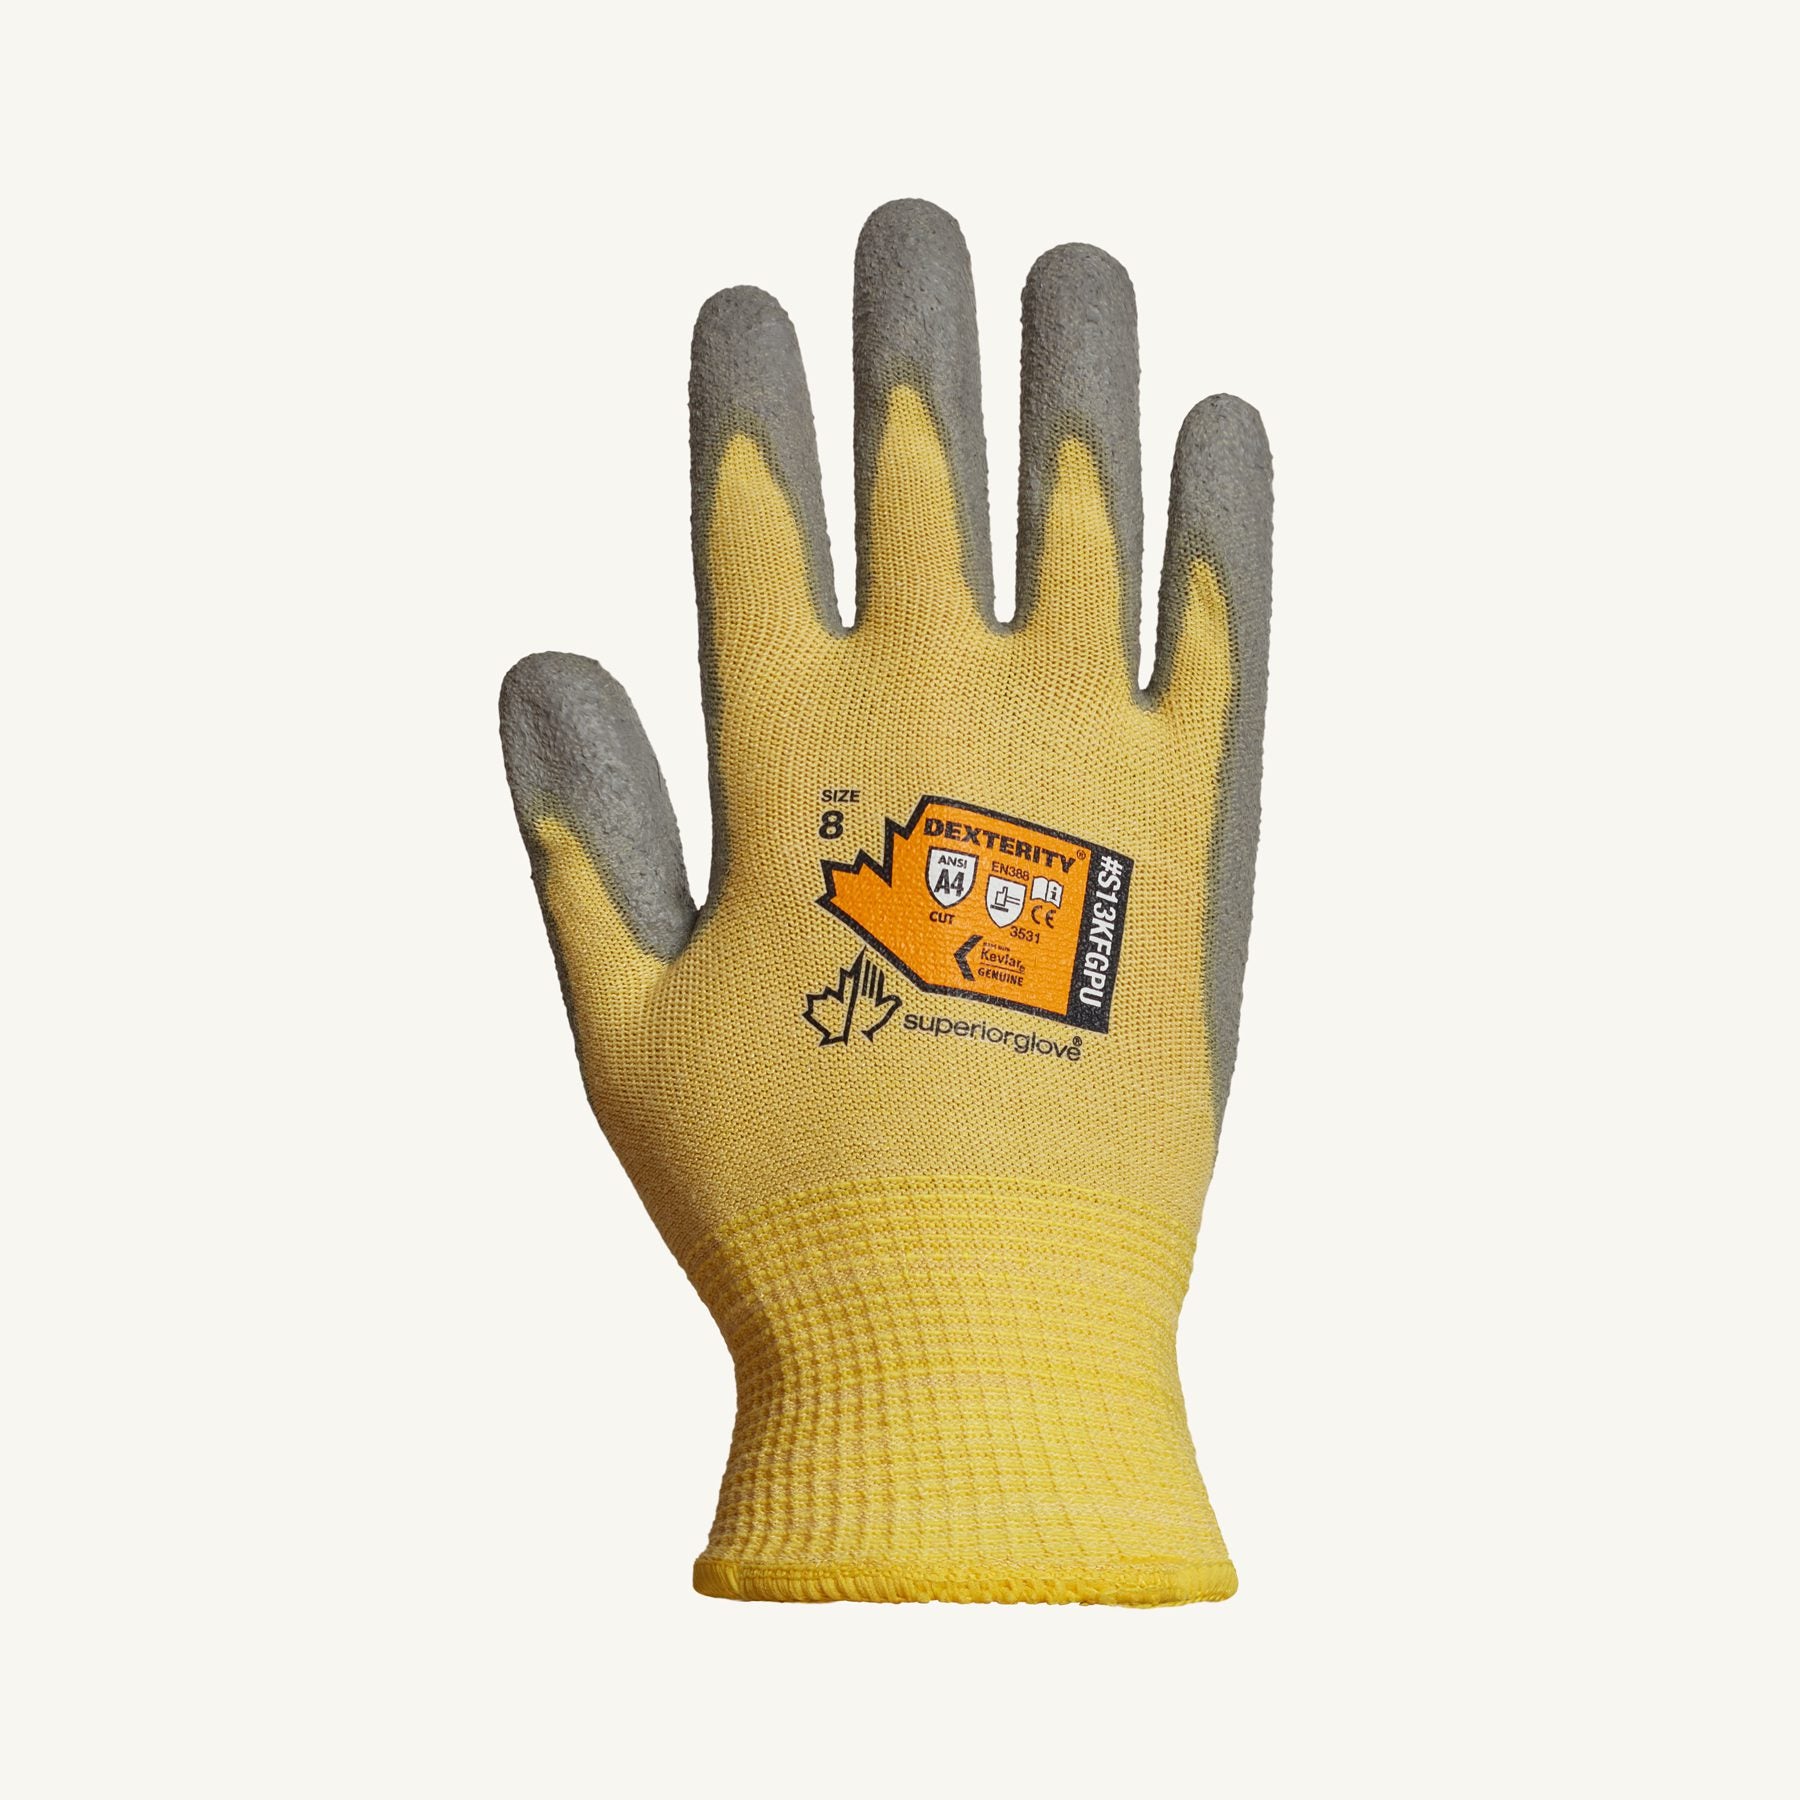 Stauffer Glove & Safety CT105ZBPU - EdgeGuard5z Hi Viz Cut